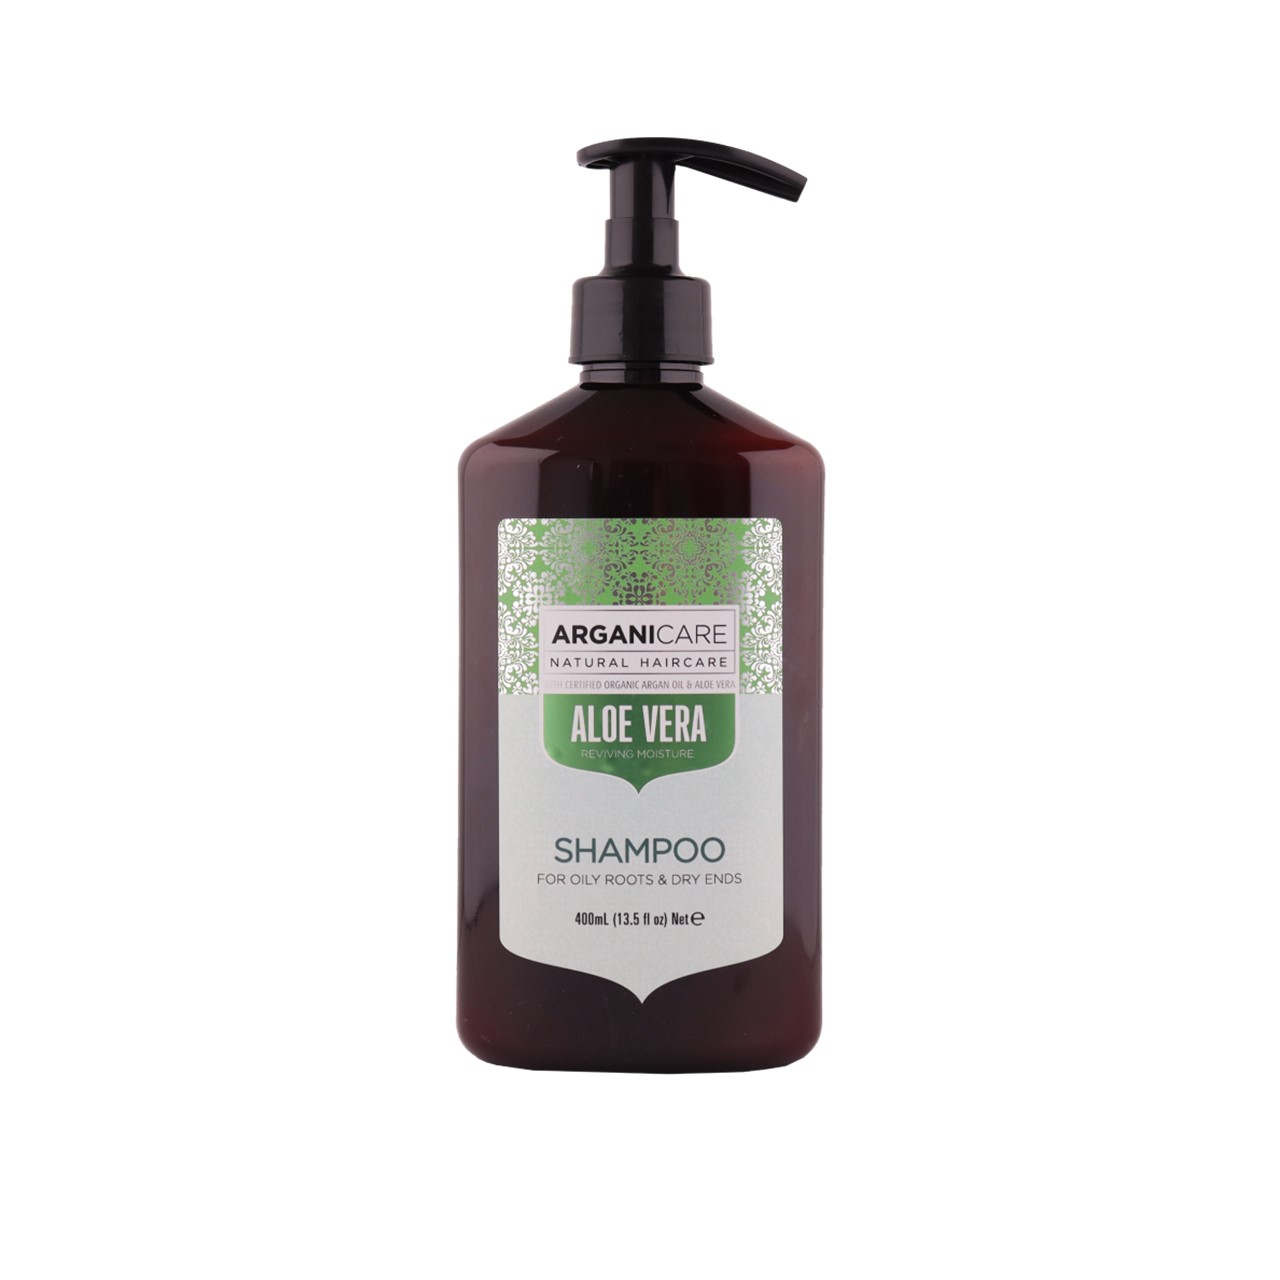 Arganicare Aloe Vera Shampoo 400ml (13.5 fl oz)